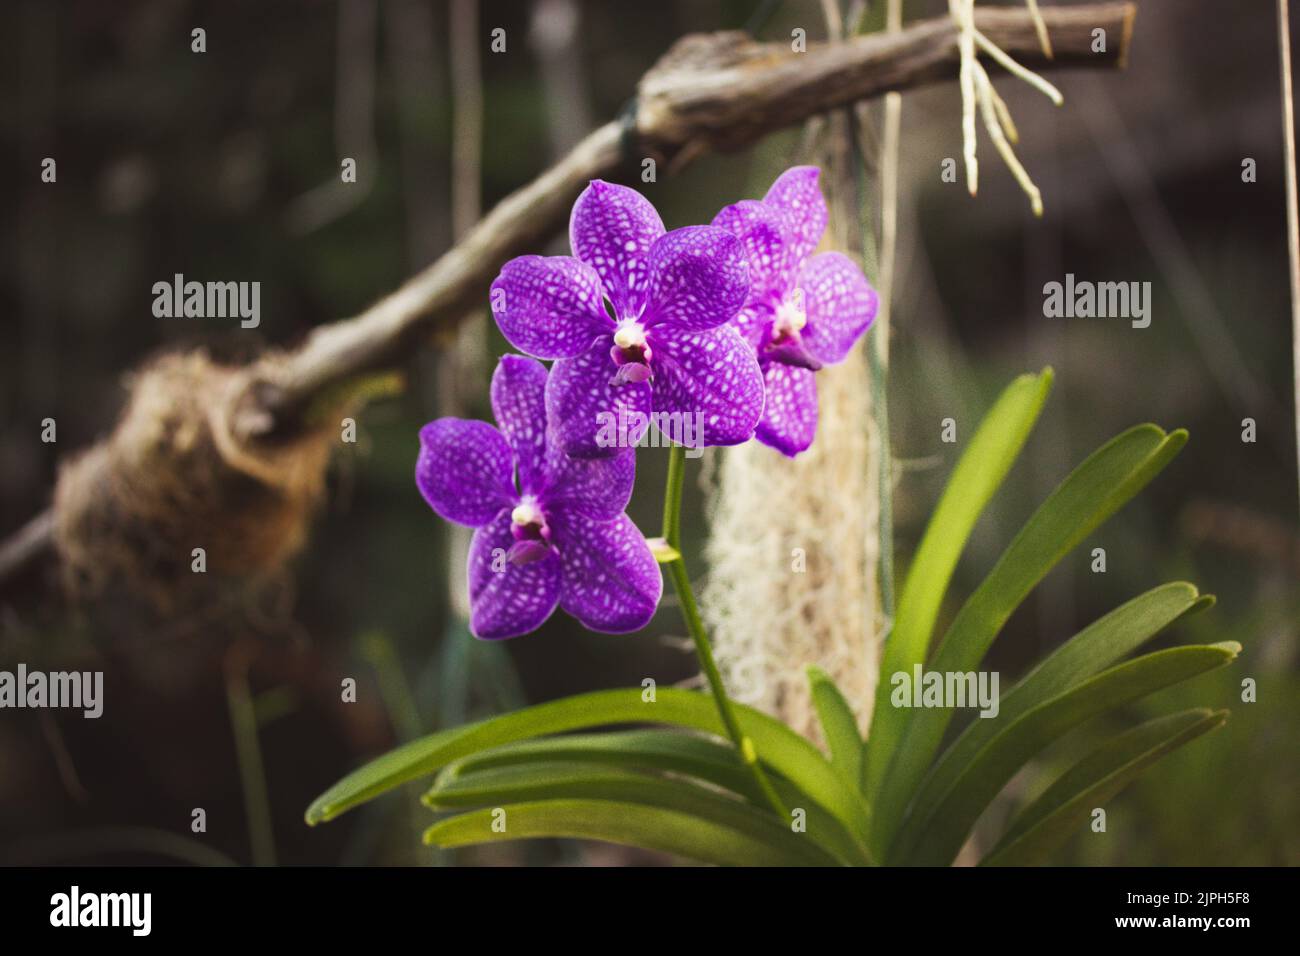 Growing purple orchid flowers in white spots in a botanical garden. Growing exotic Phalaenopsis flower full bloom. Blooming flowers pistil stamen in a Stock Photo